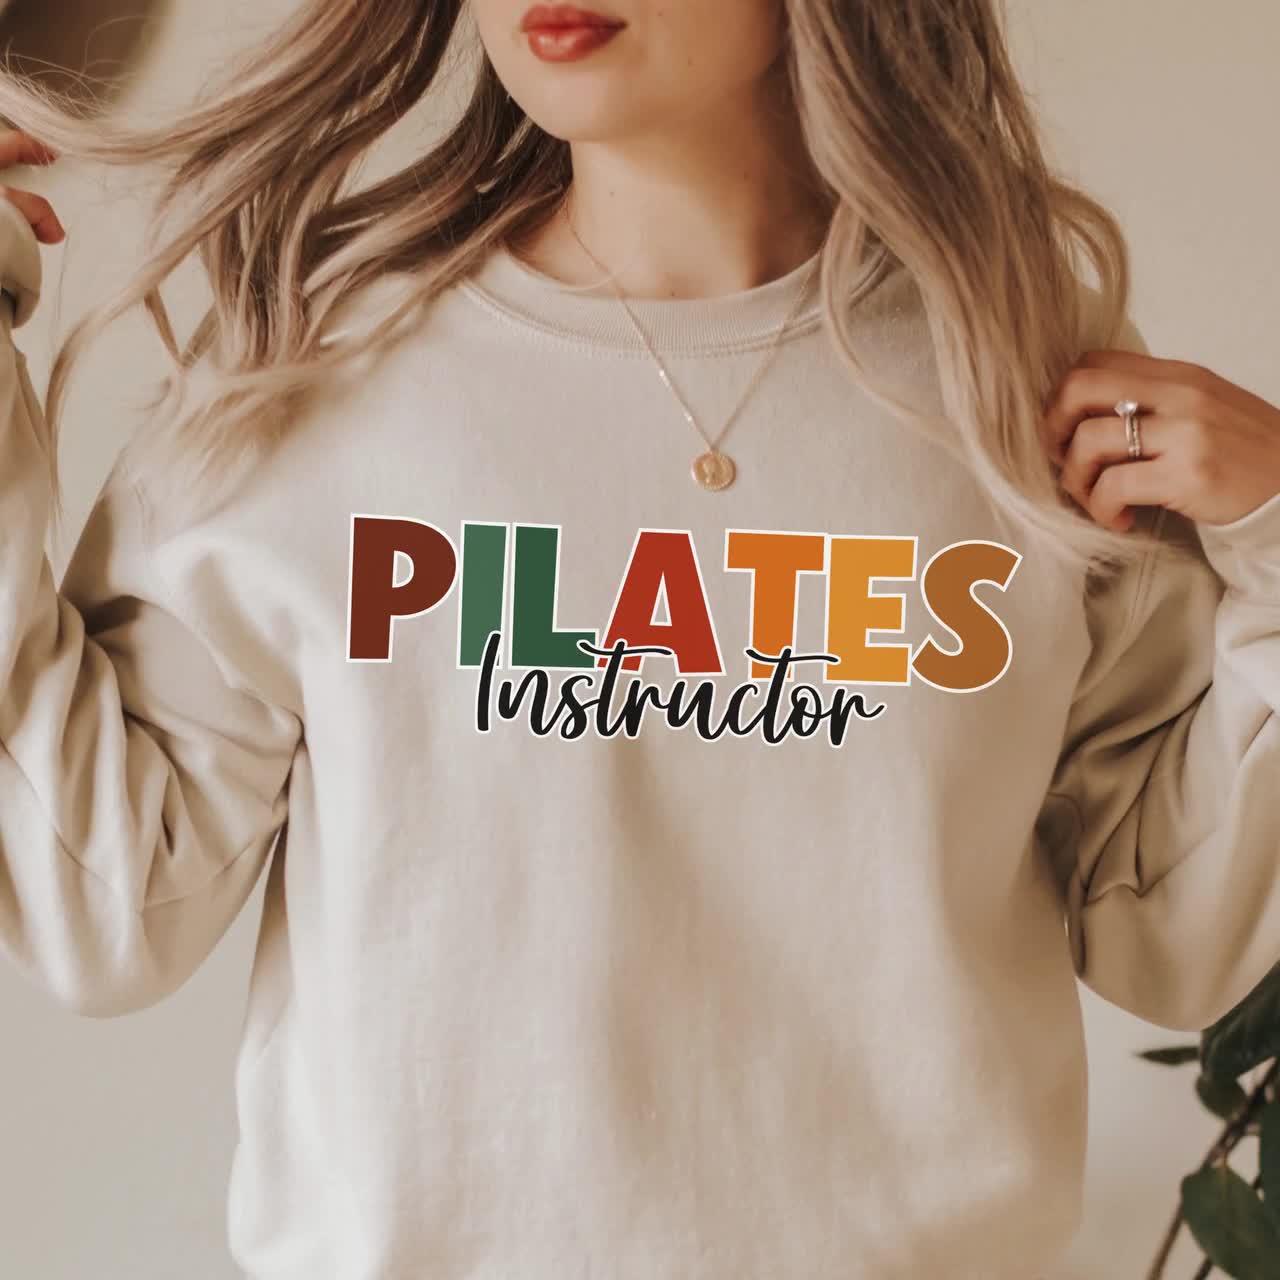 Antisocial Pilates Club, Pilates Sweatshirt, Pilates Teacher Gift